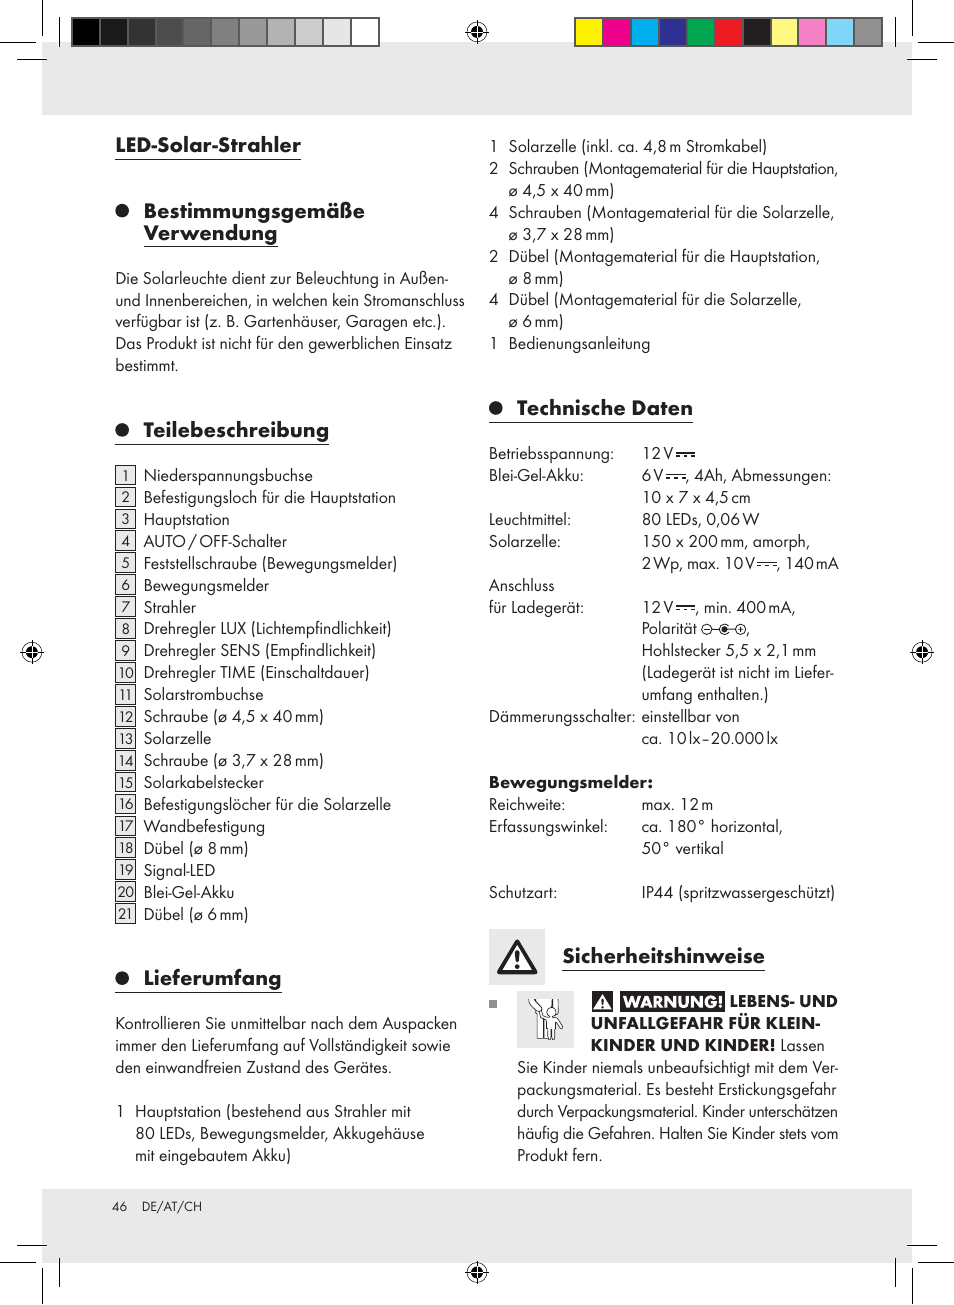 Led-solar-strahler bestimmungsgemäße verwendung, Teilebeschreibung,  Lieferumfang | Livarno Z31171 User Manual | Page 46 / 54 | Original mode